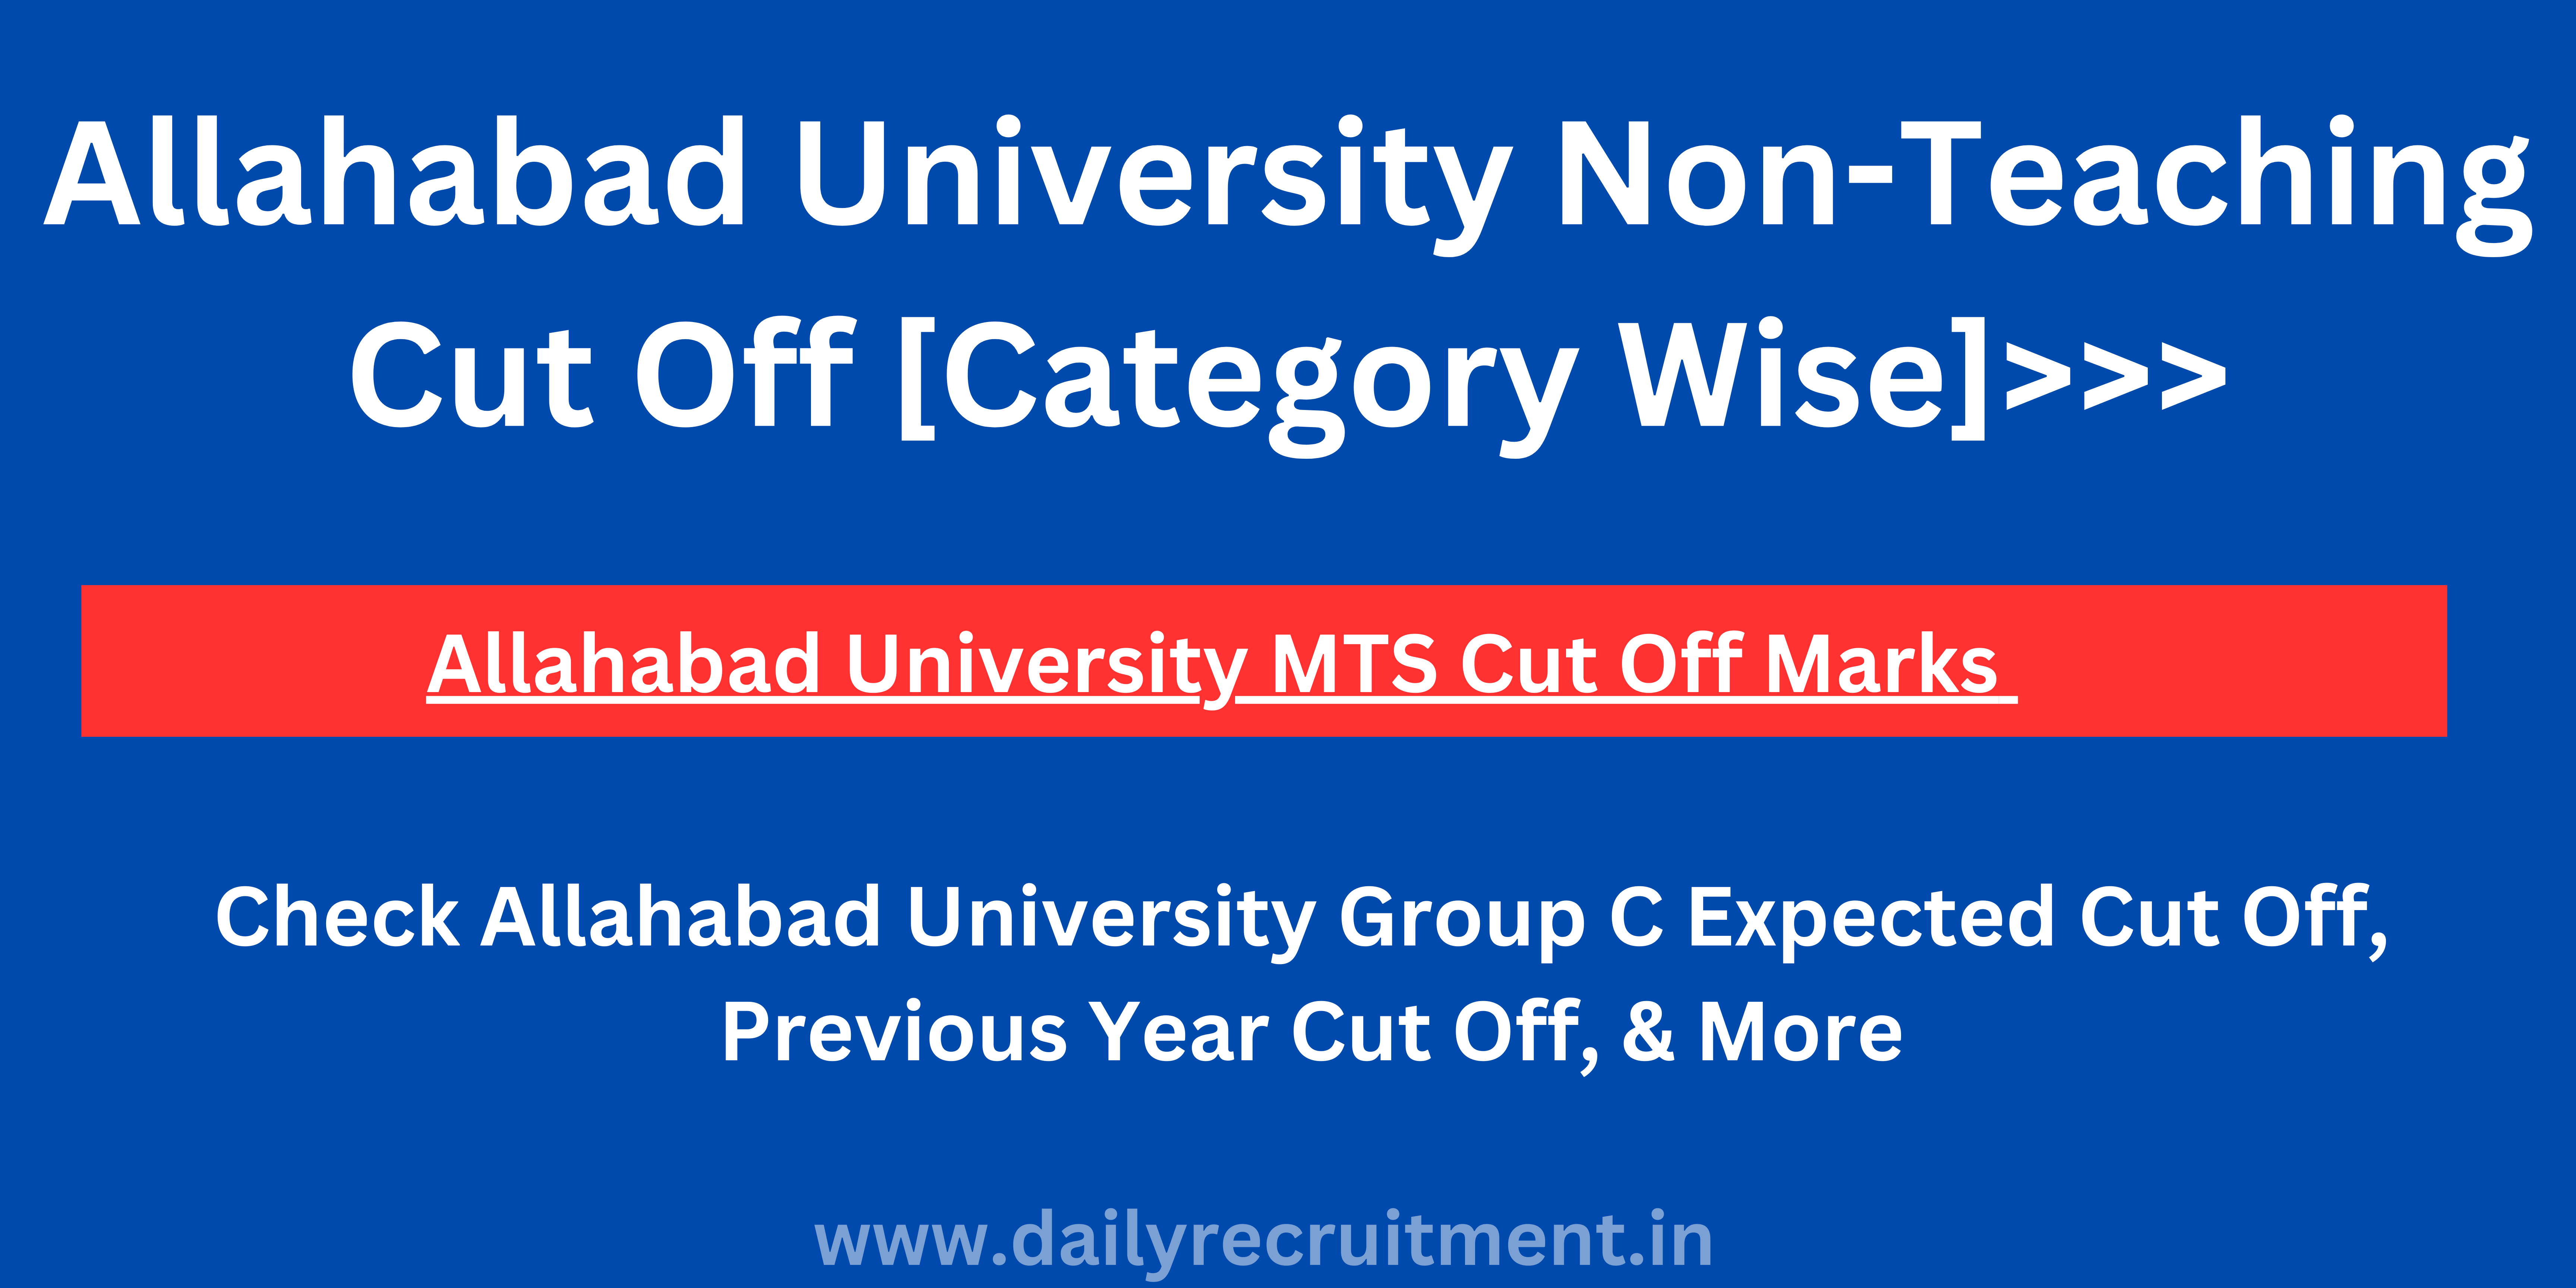 Allahabad University Non-Teaching Cut Off